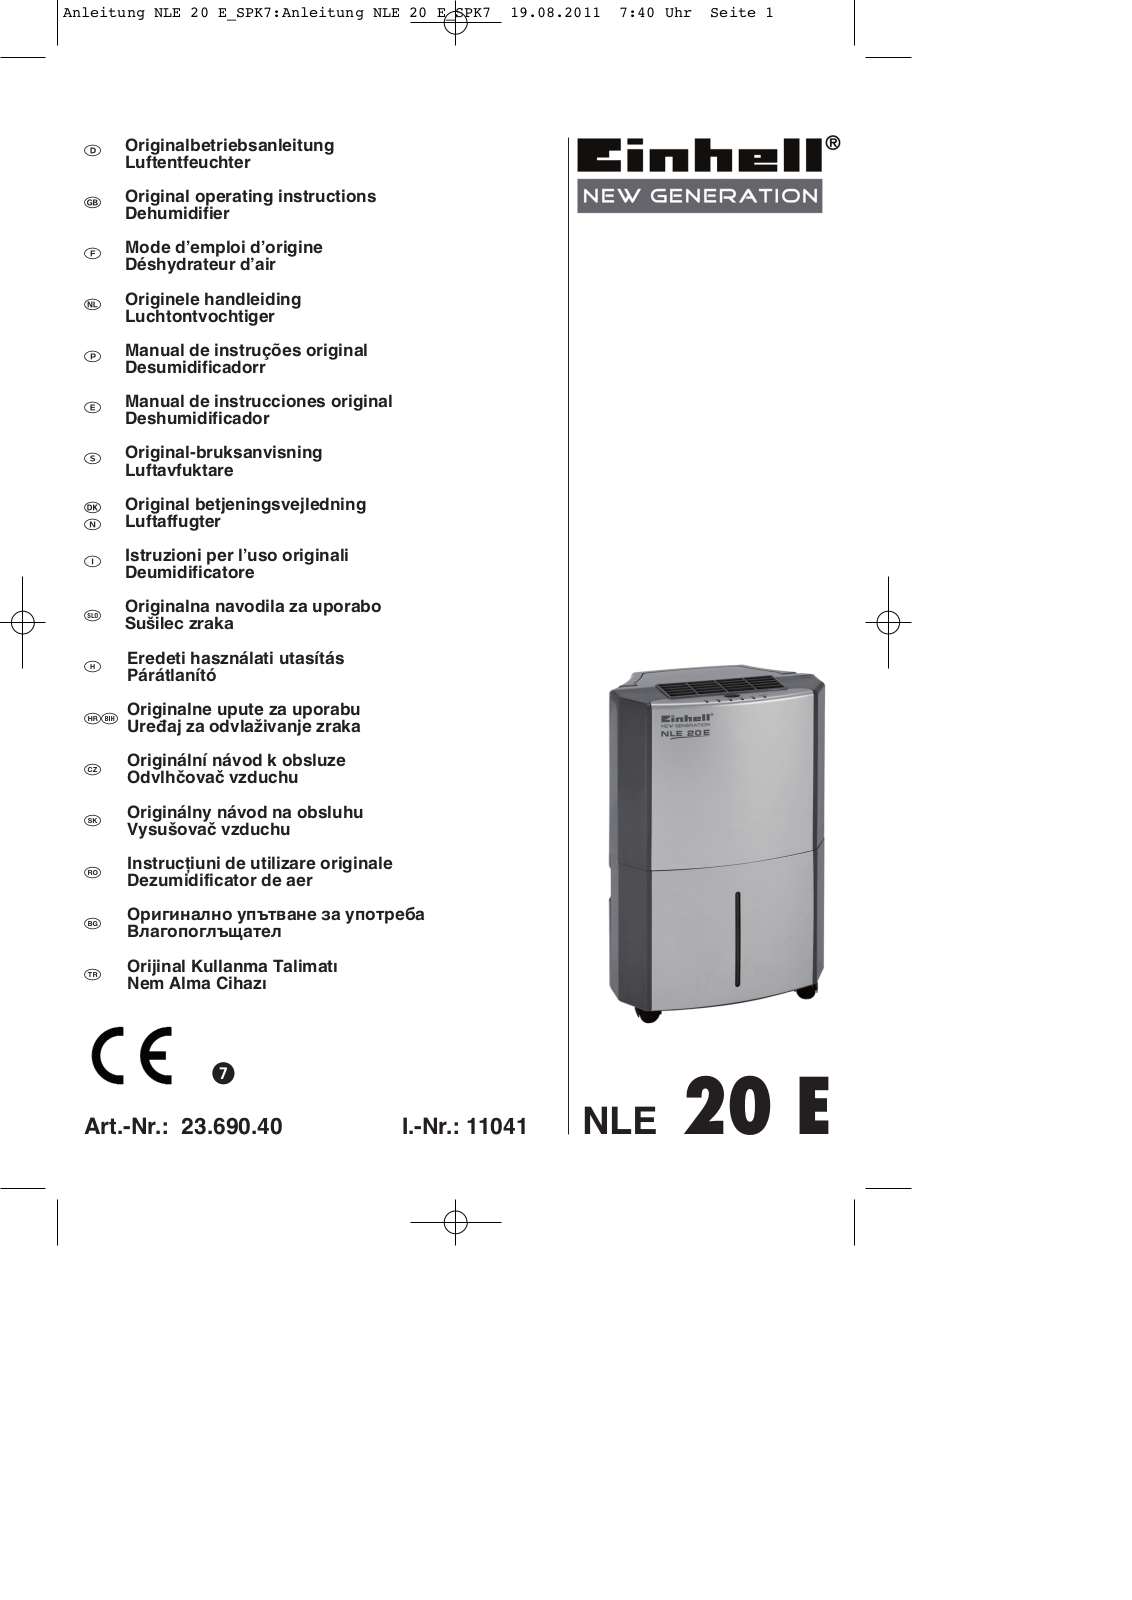 EINHELL NLE 20 E User Manual